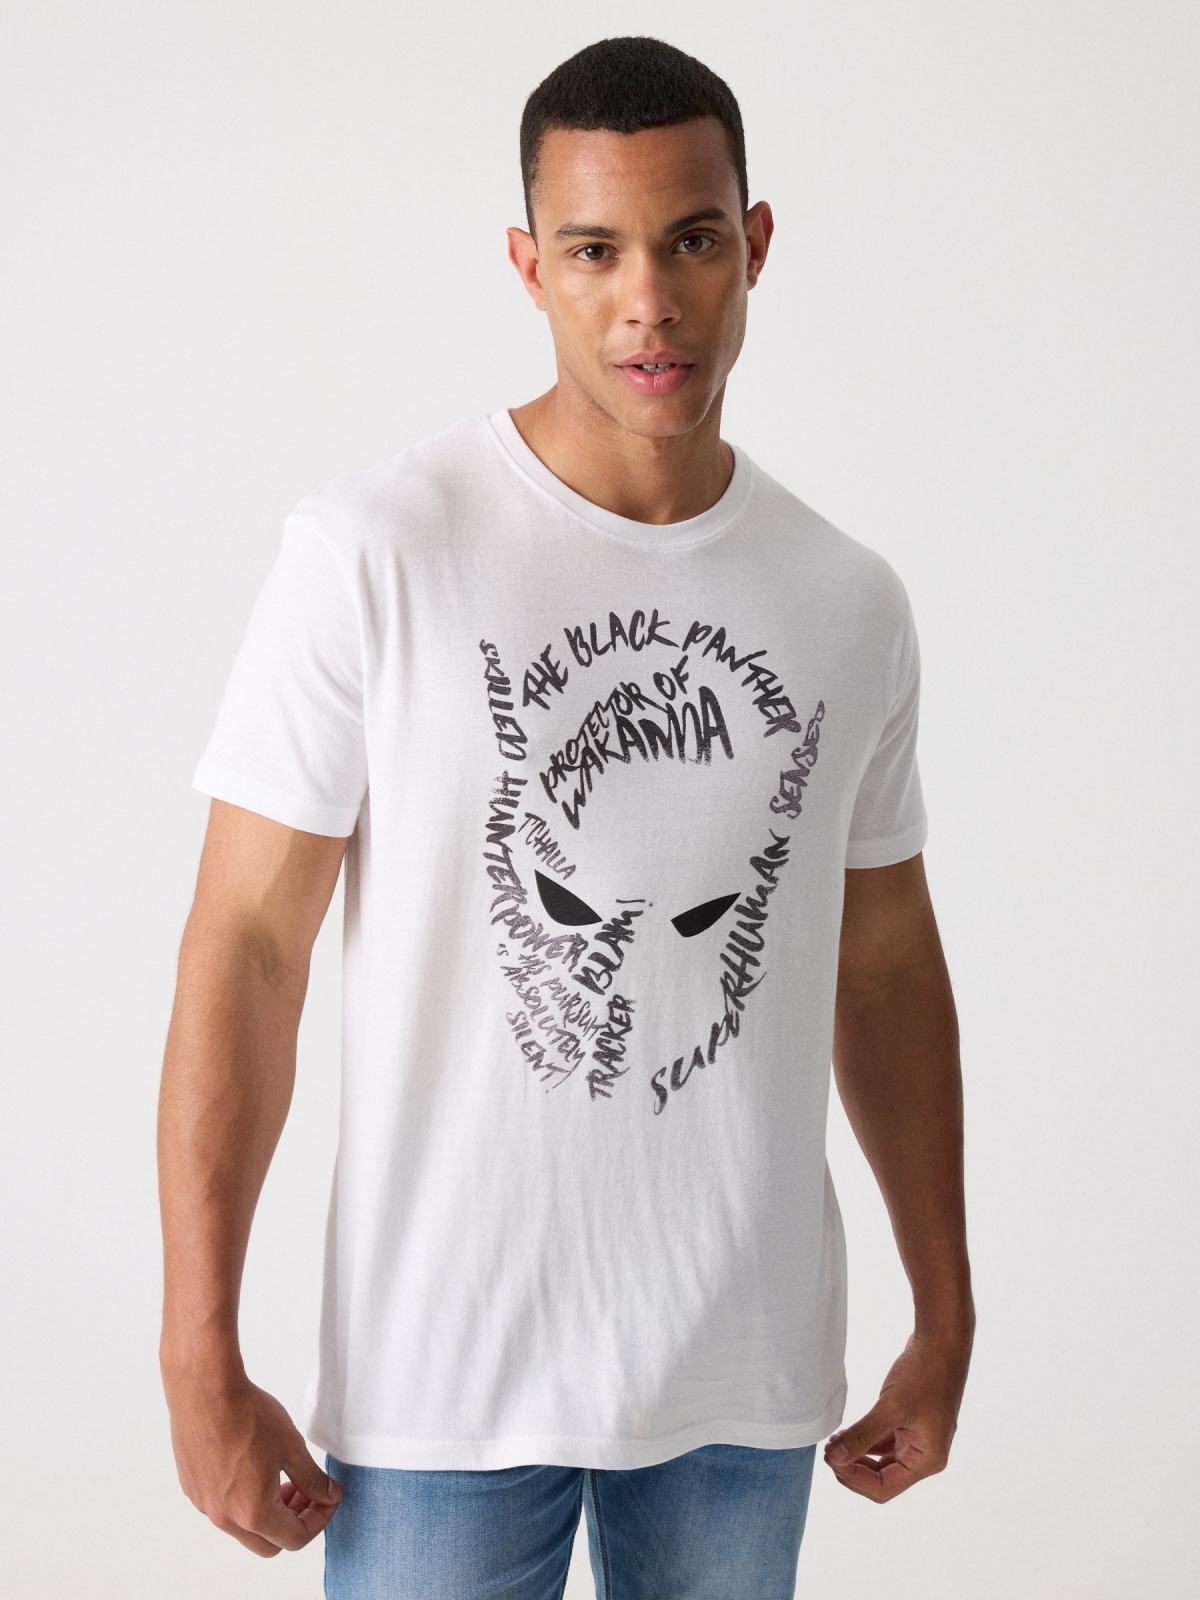 Camiseta estampado pantera negra blanco vista media frontal